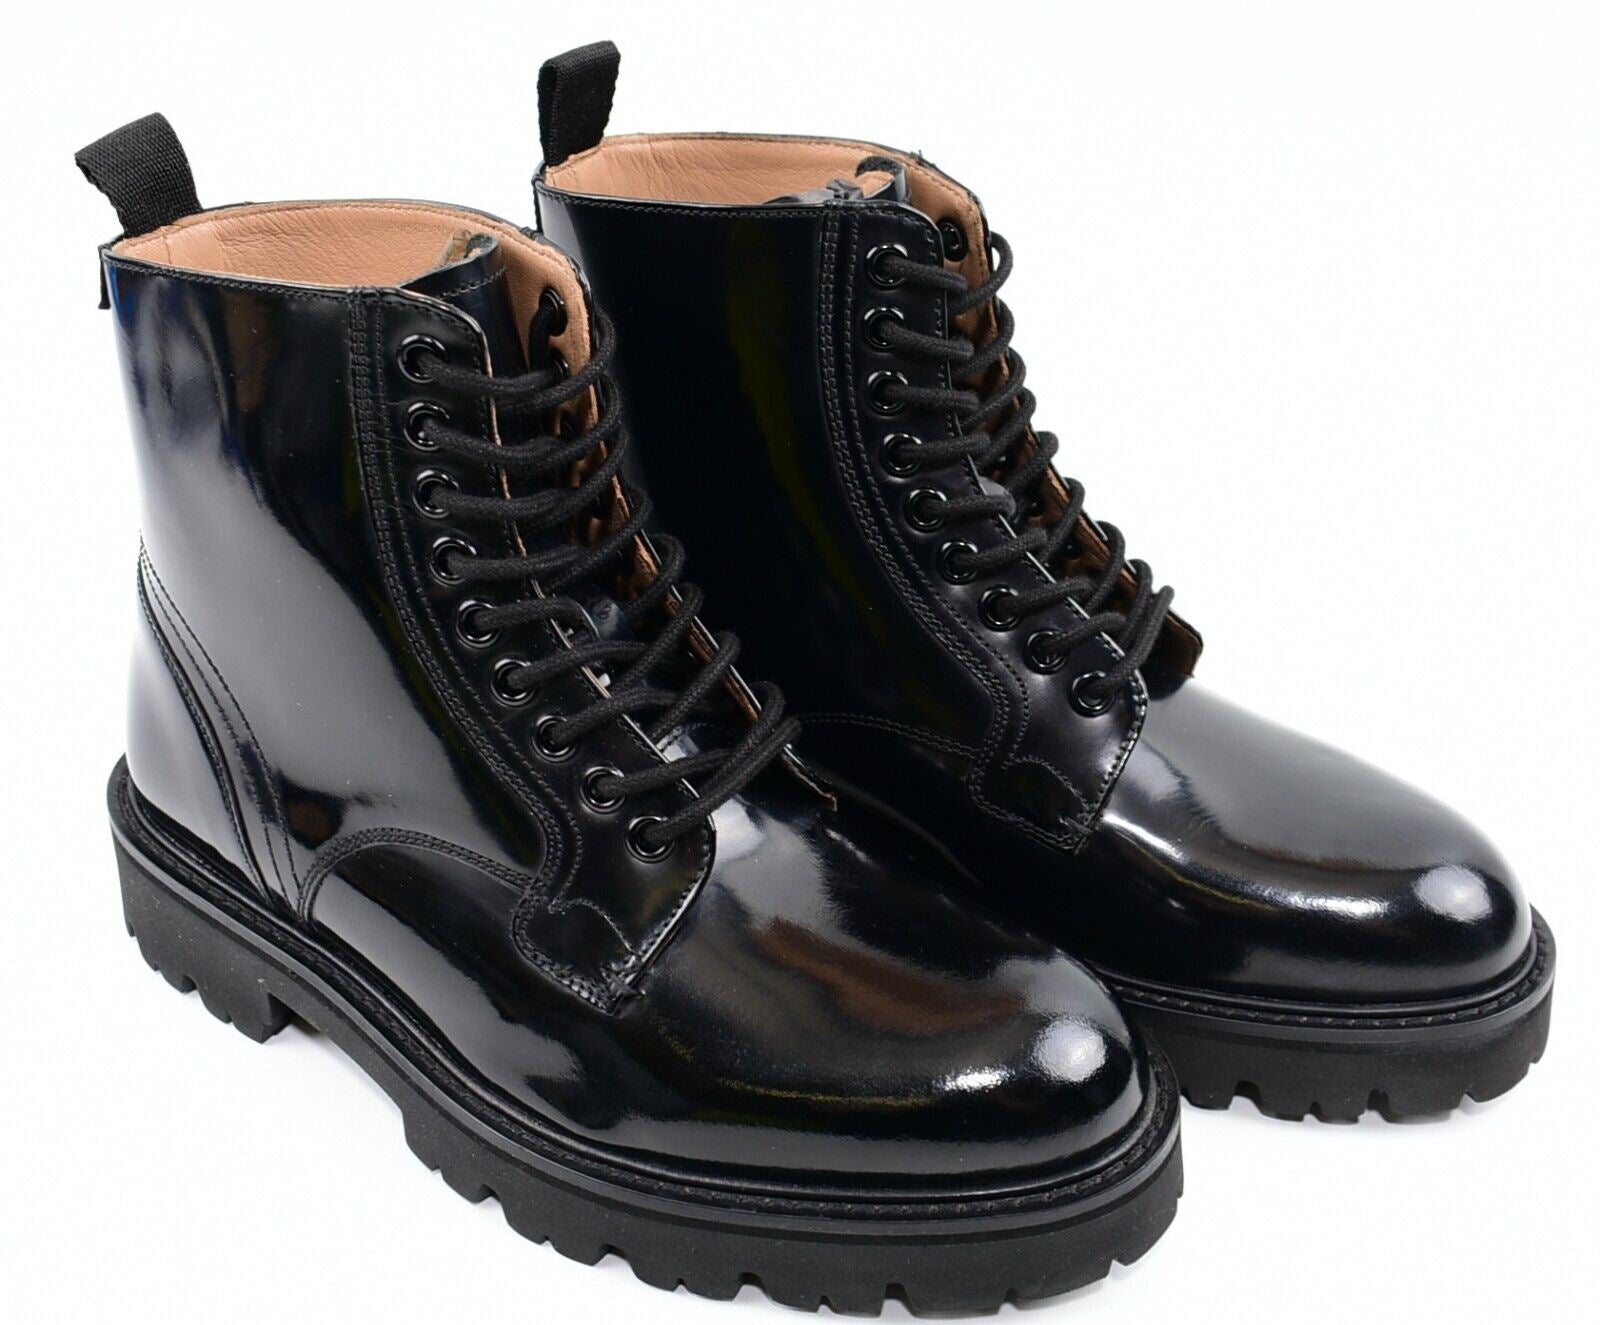 TED BAKER Women's MASCY Ankle Boots, Genuine Leather, Black, size UK 4 / EU 37